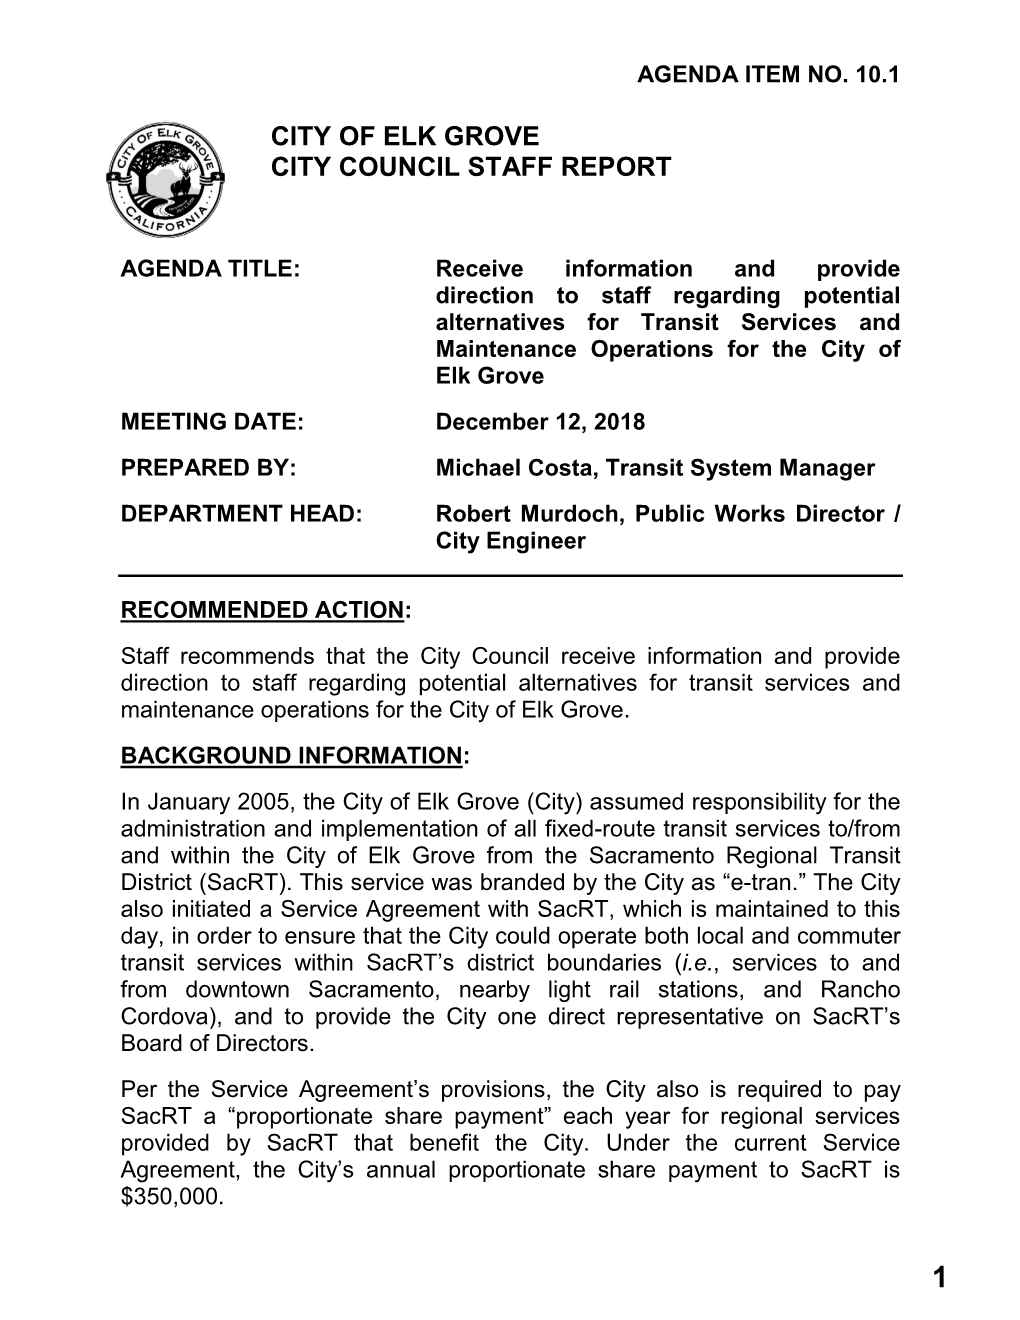 City of Elk Grove City Council Staff Report